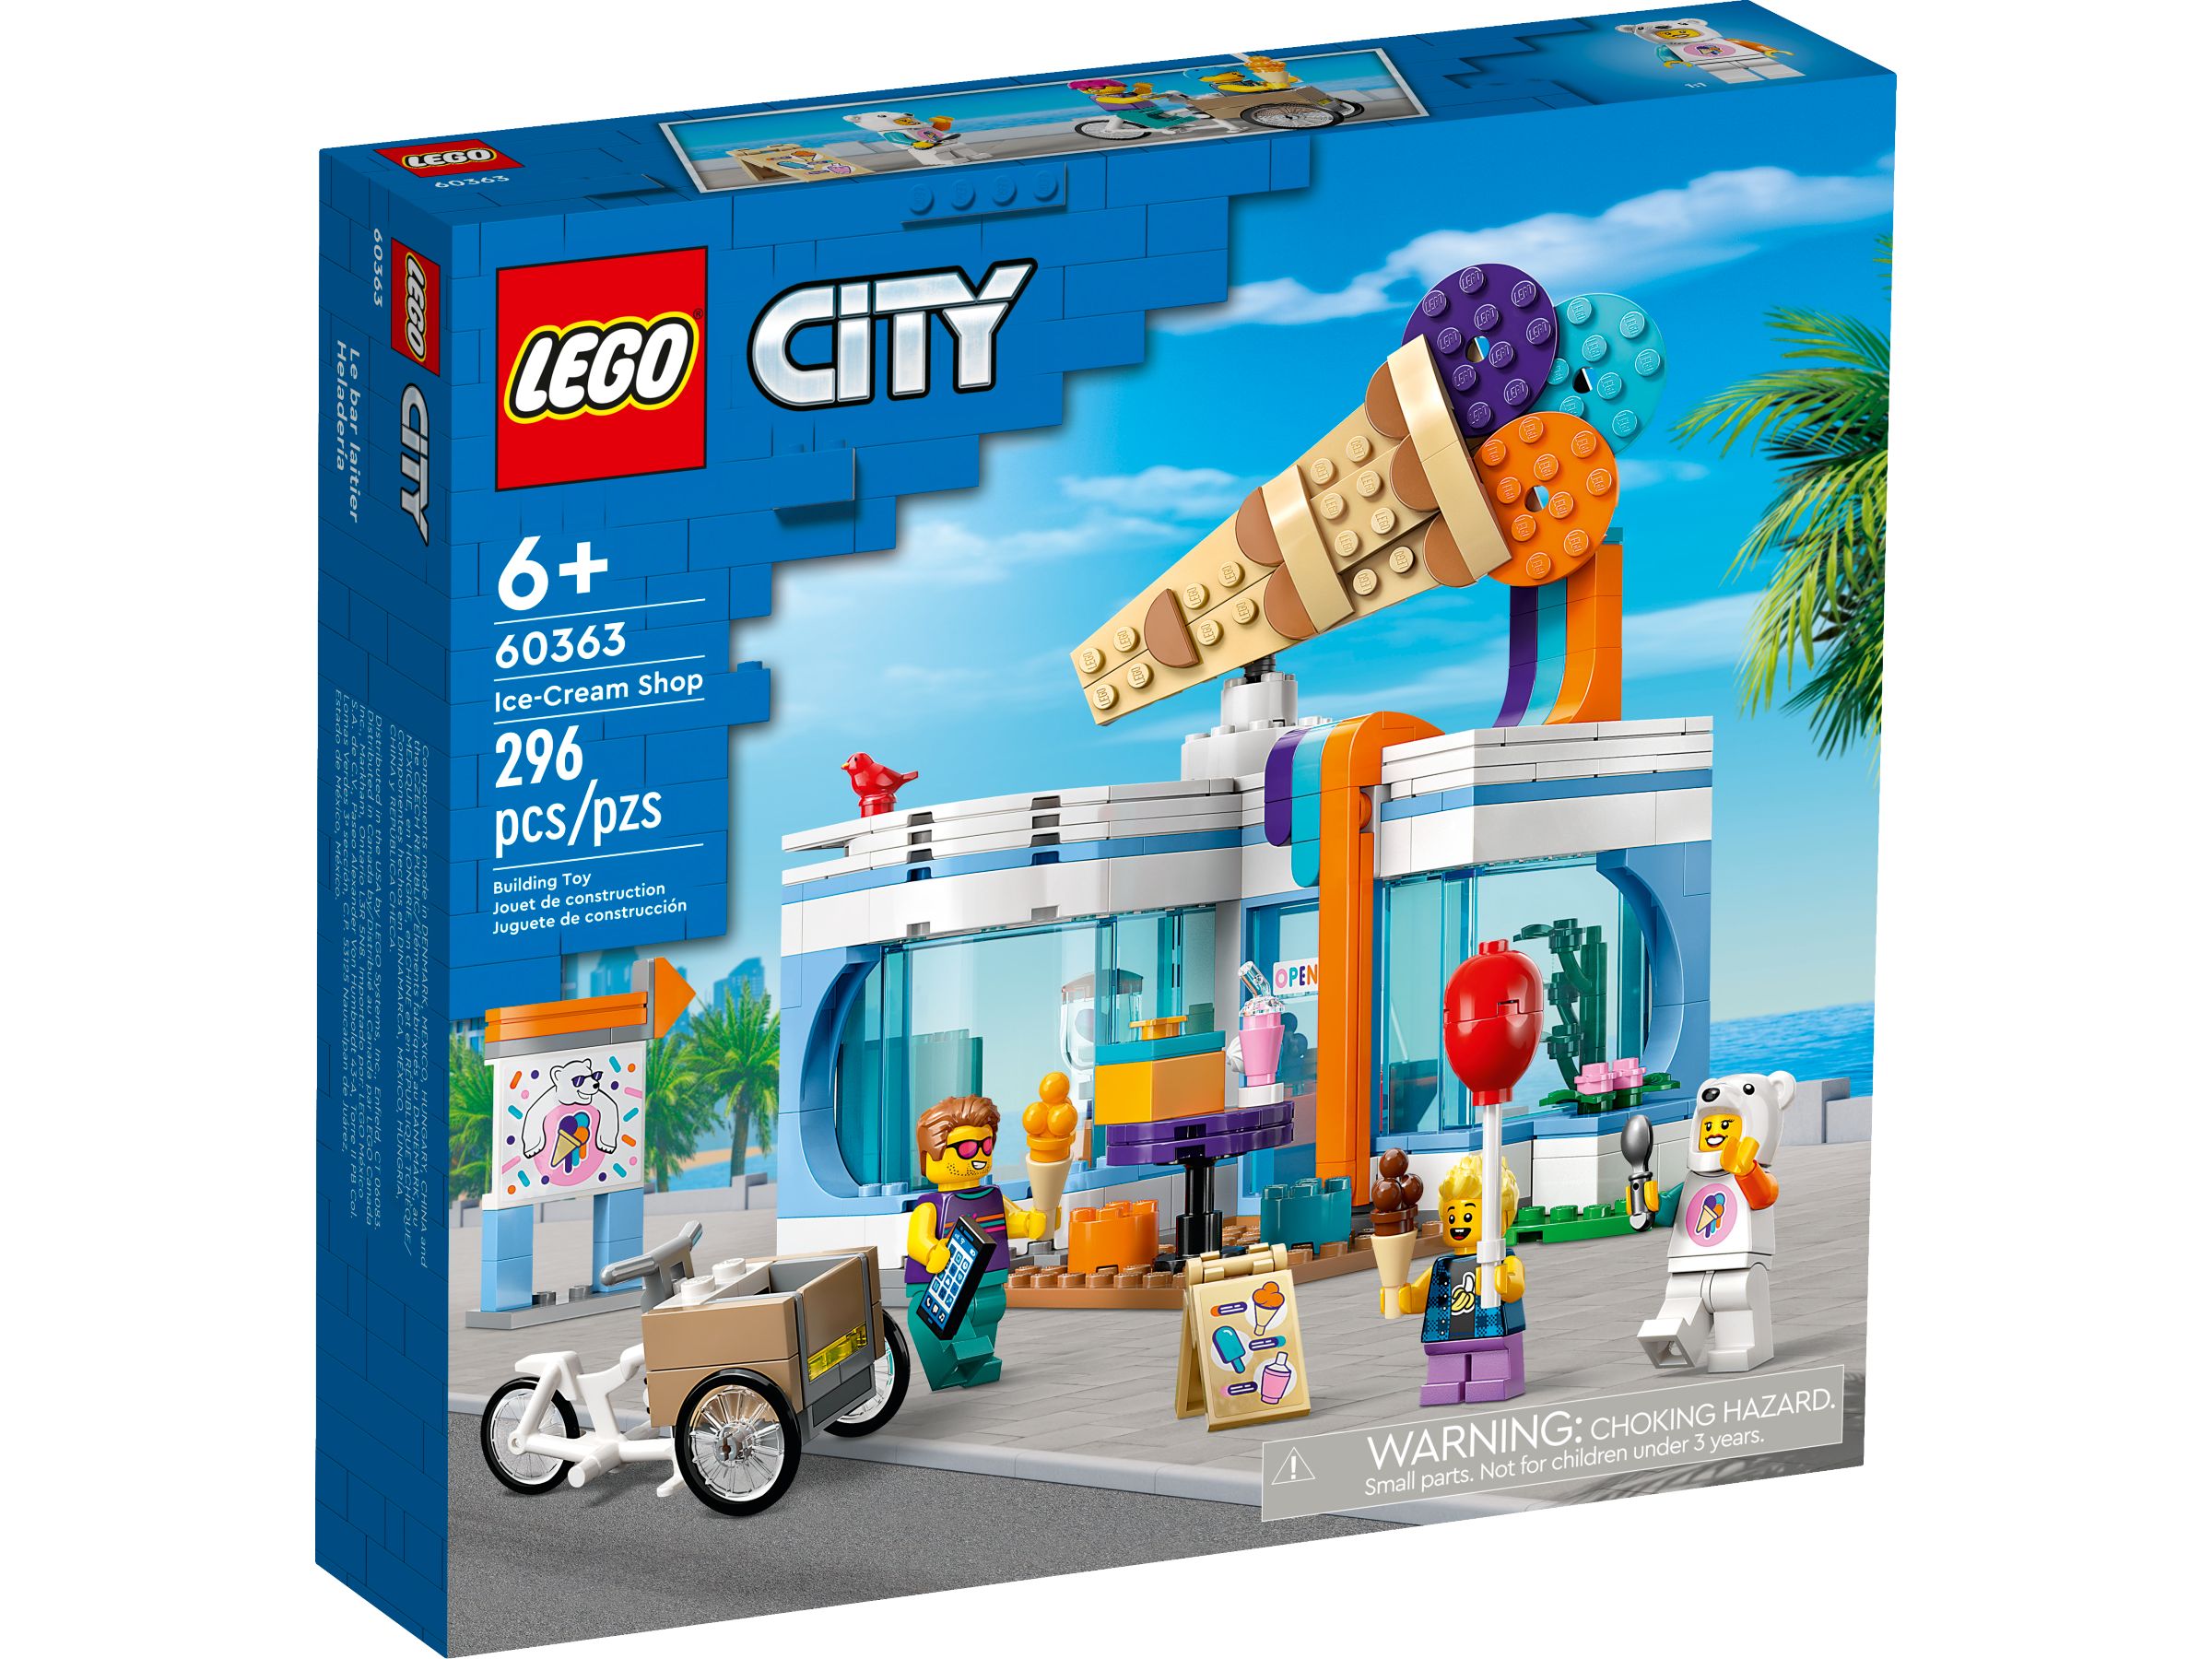 LEGO City 60363 Eisdiele LEGO_60363_alt1.jpg